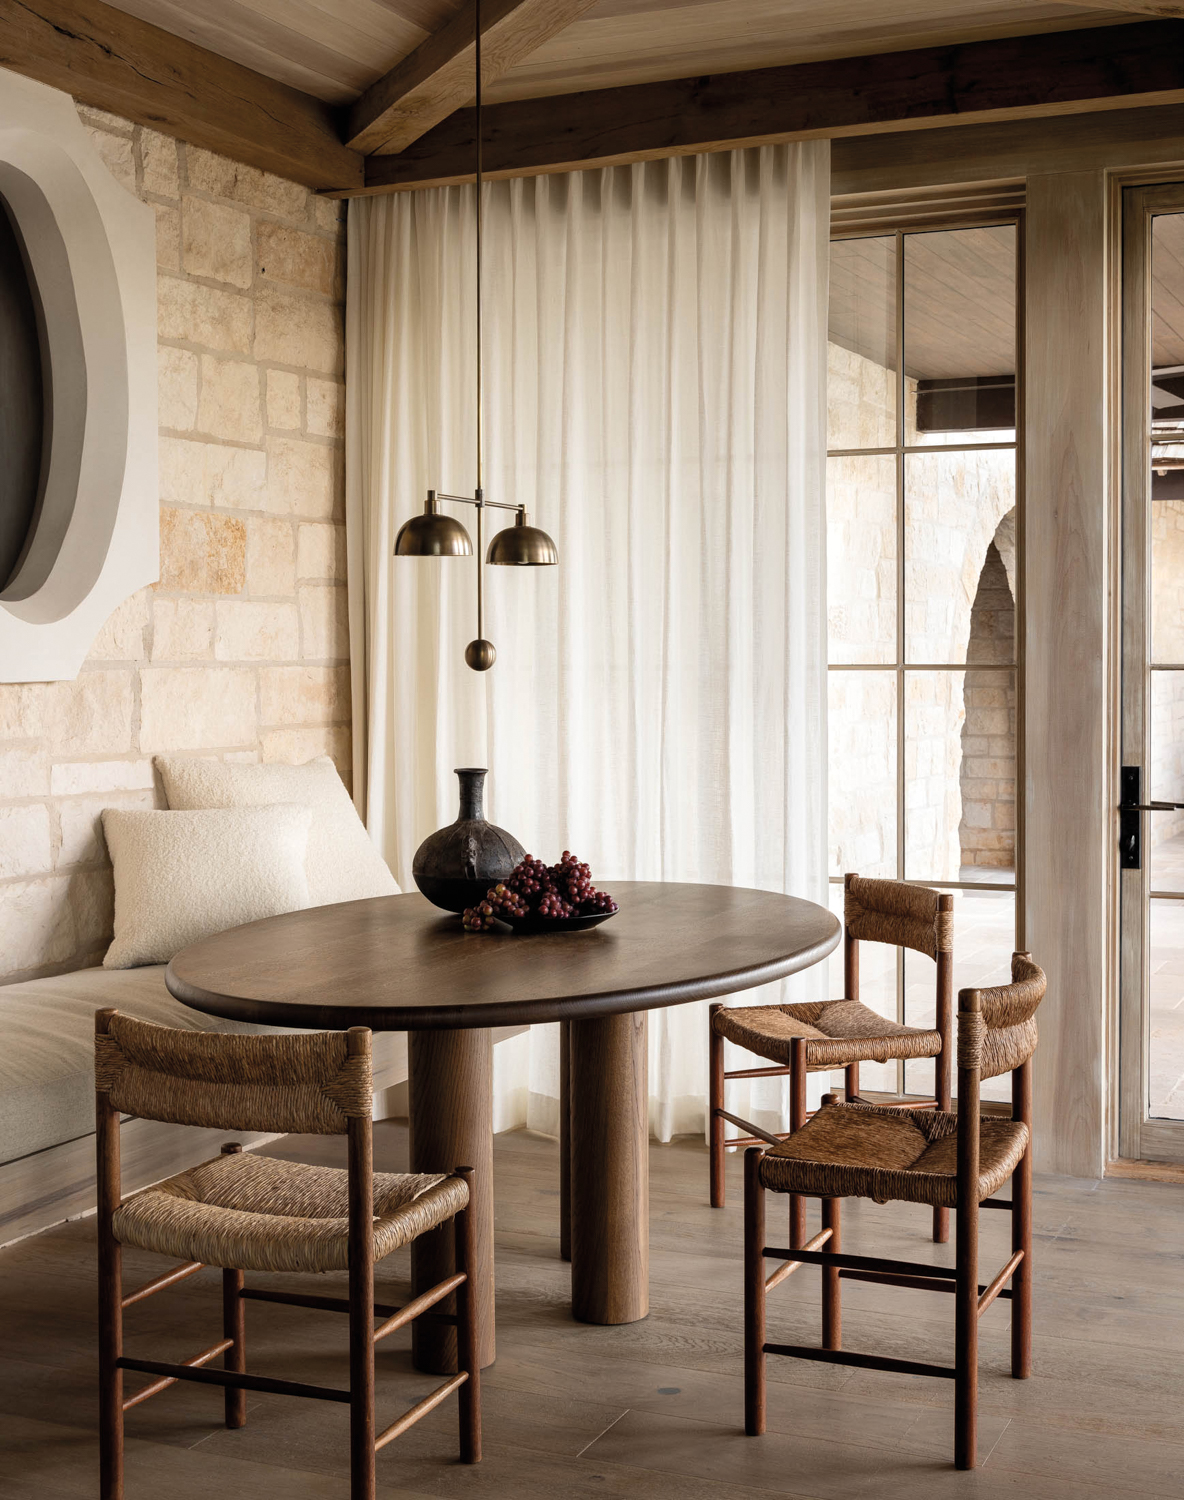 Breakfast nook with light wood floors and trim around floor-to-ceiling windows and doors